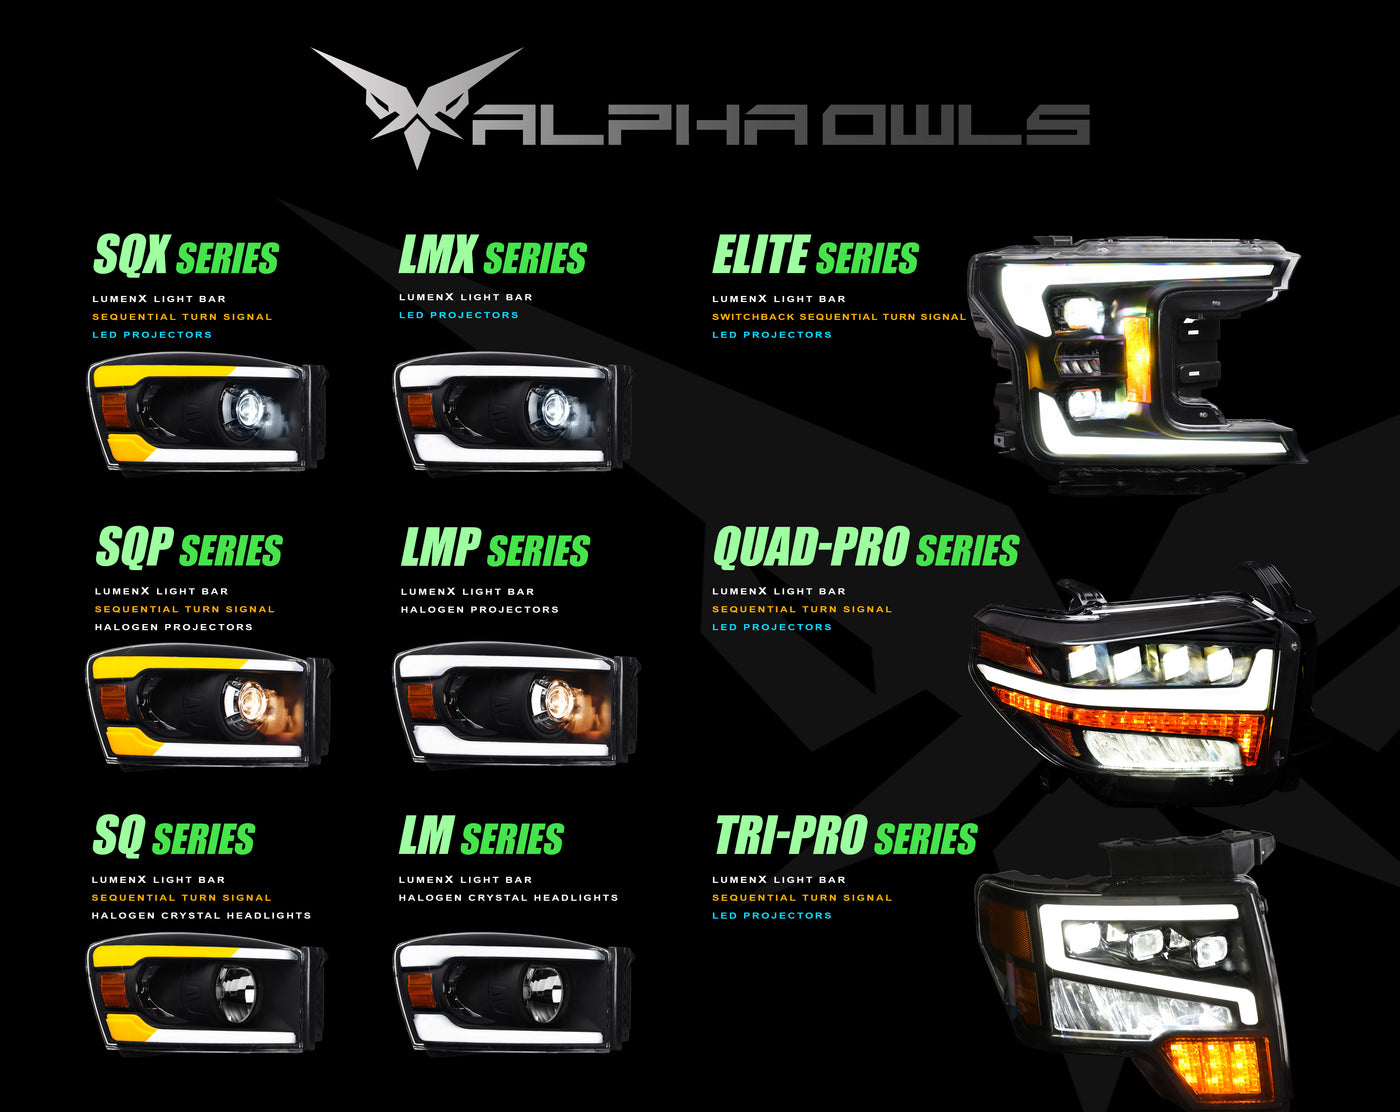 Alpha Owls Headlights, Alpha Owls Lincoln Headlights, Lincoln 2006-2008 Headlights, Lincoln Mark-LT Headlights, Headlights, Chrome housing Headlights